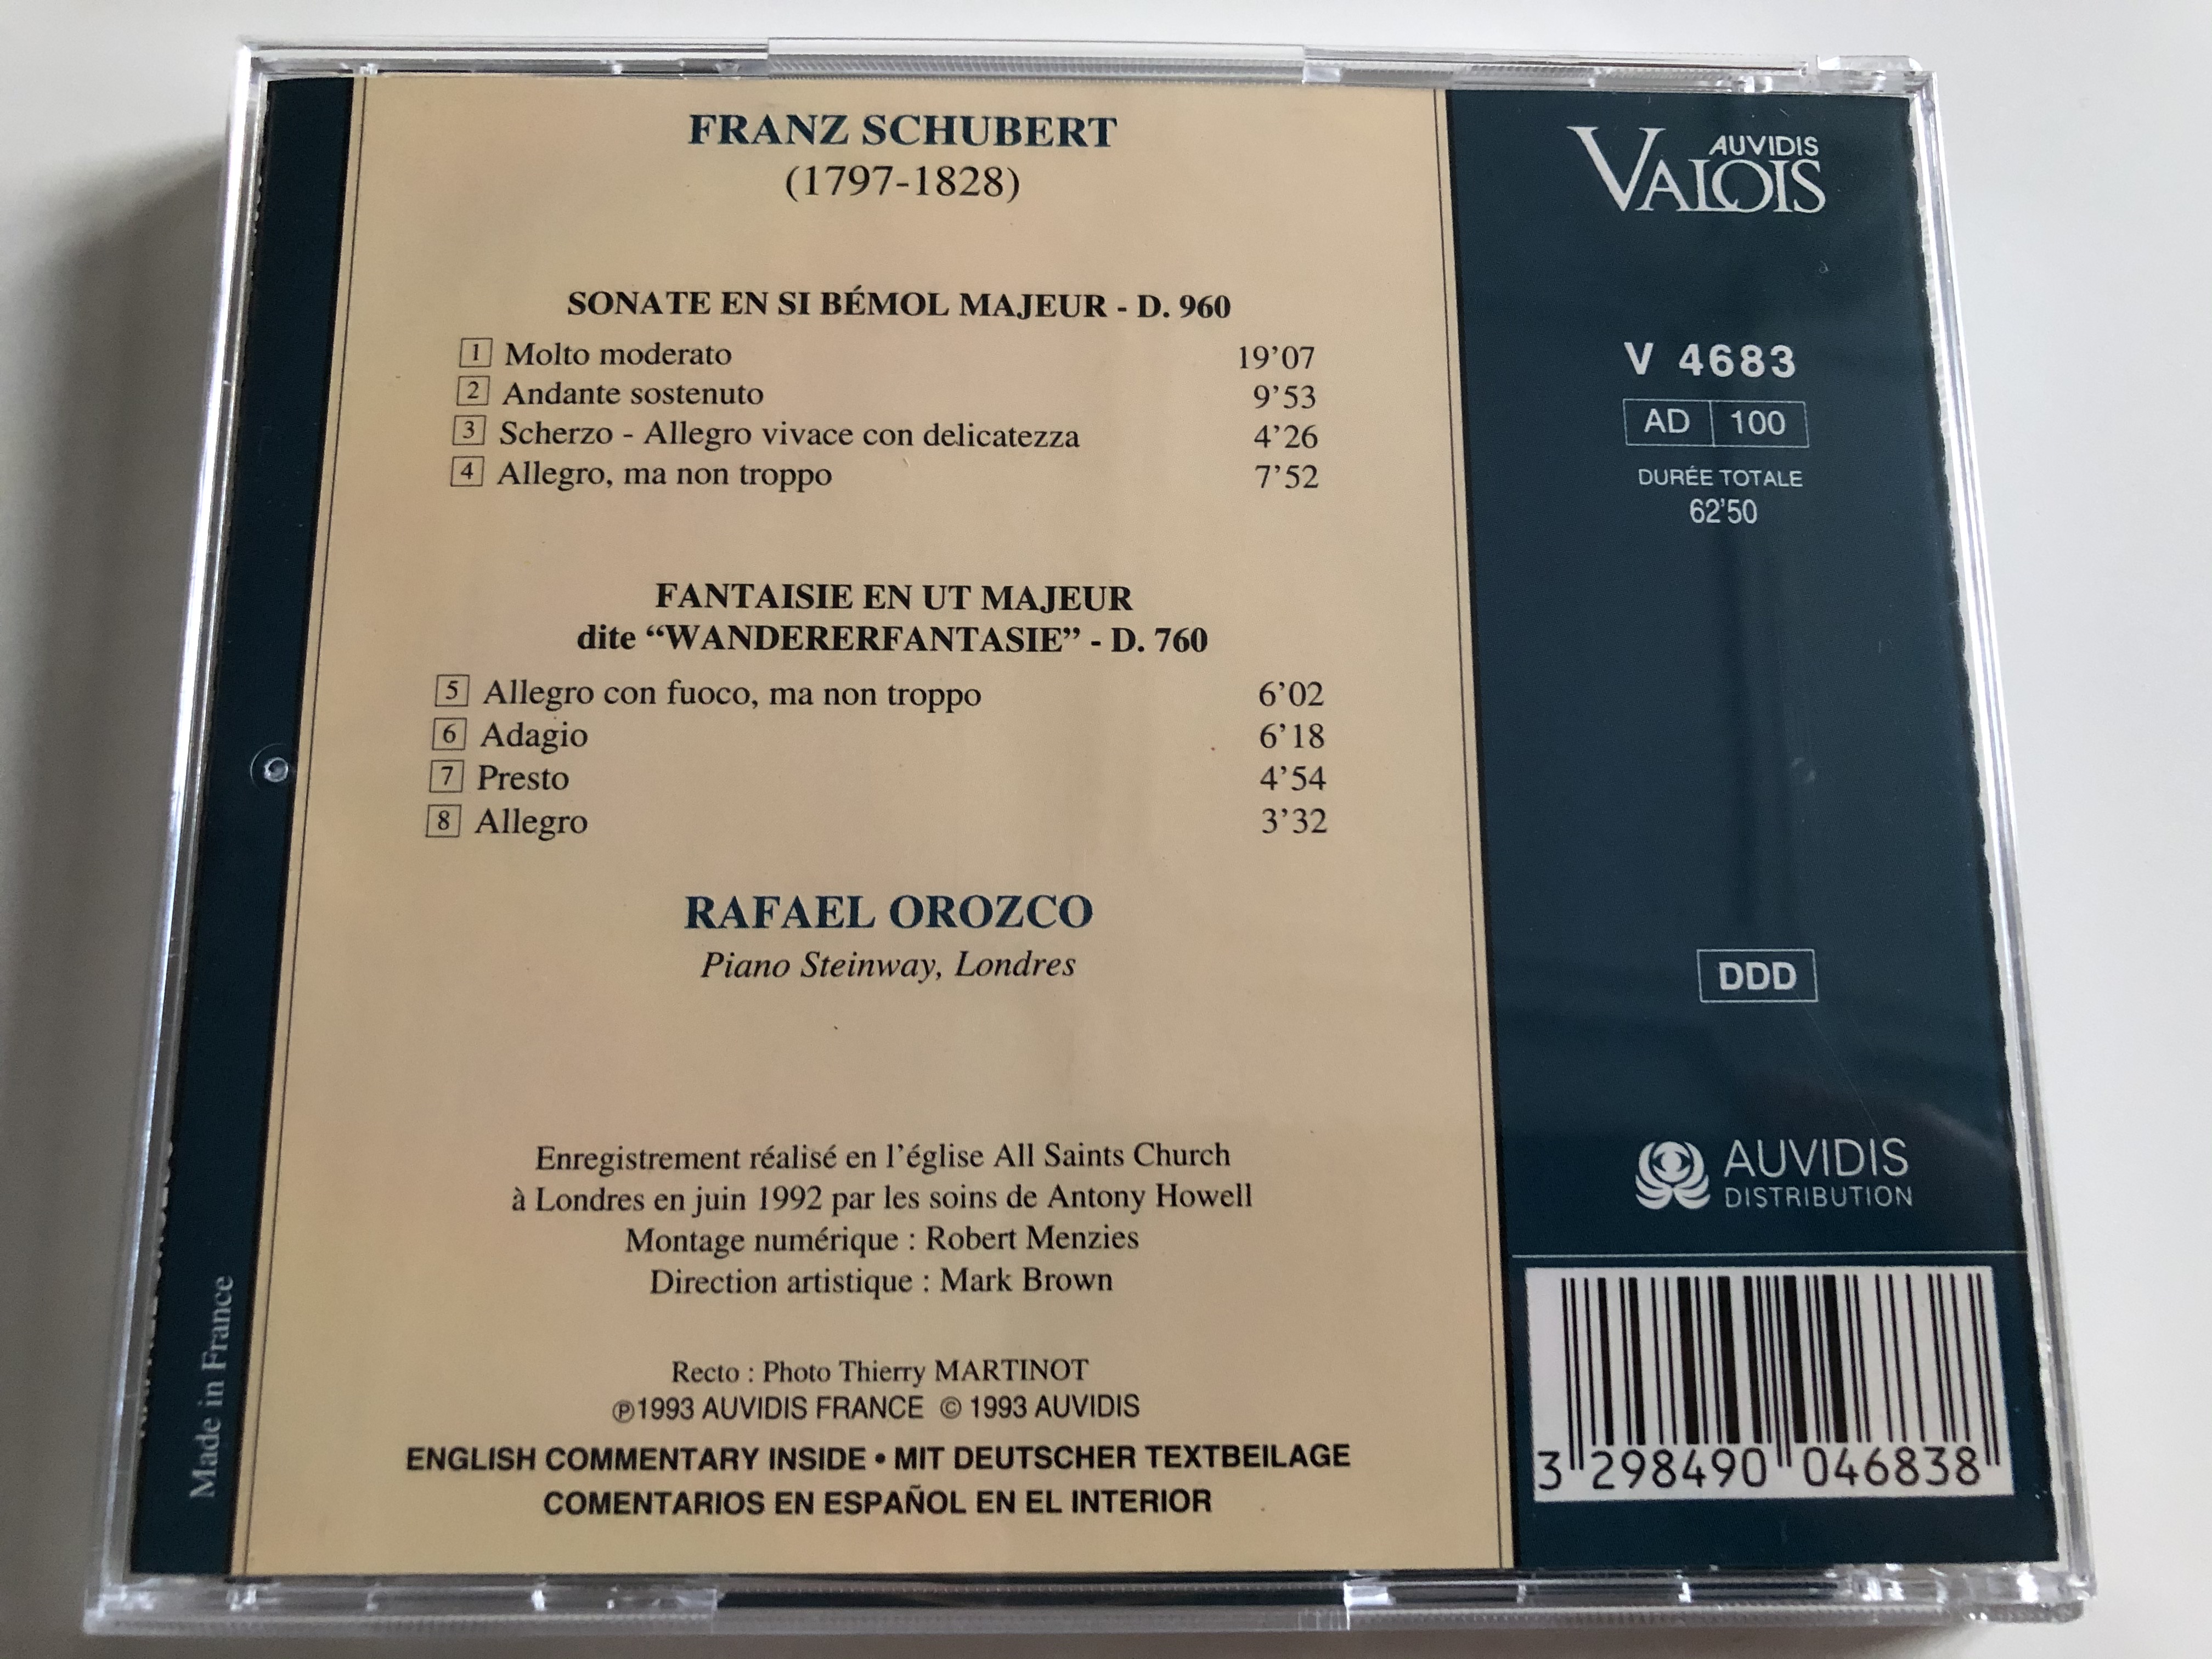 schubert-sonate-en-si-b-mol-majeur-wandererfantaisie-rafael-orozco-auvidis-france-audio-cd-1993-v-4683-8-.jpg